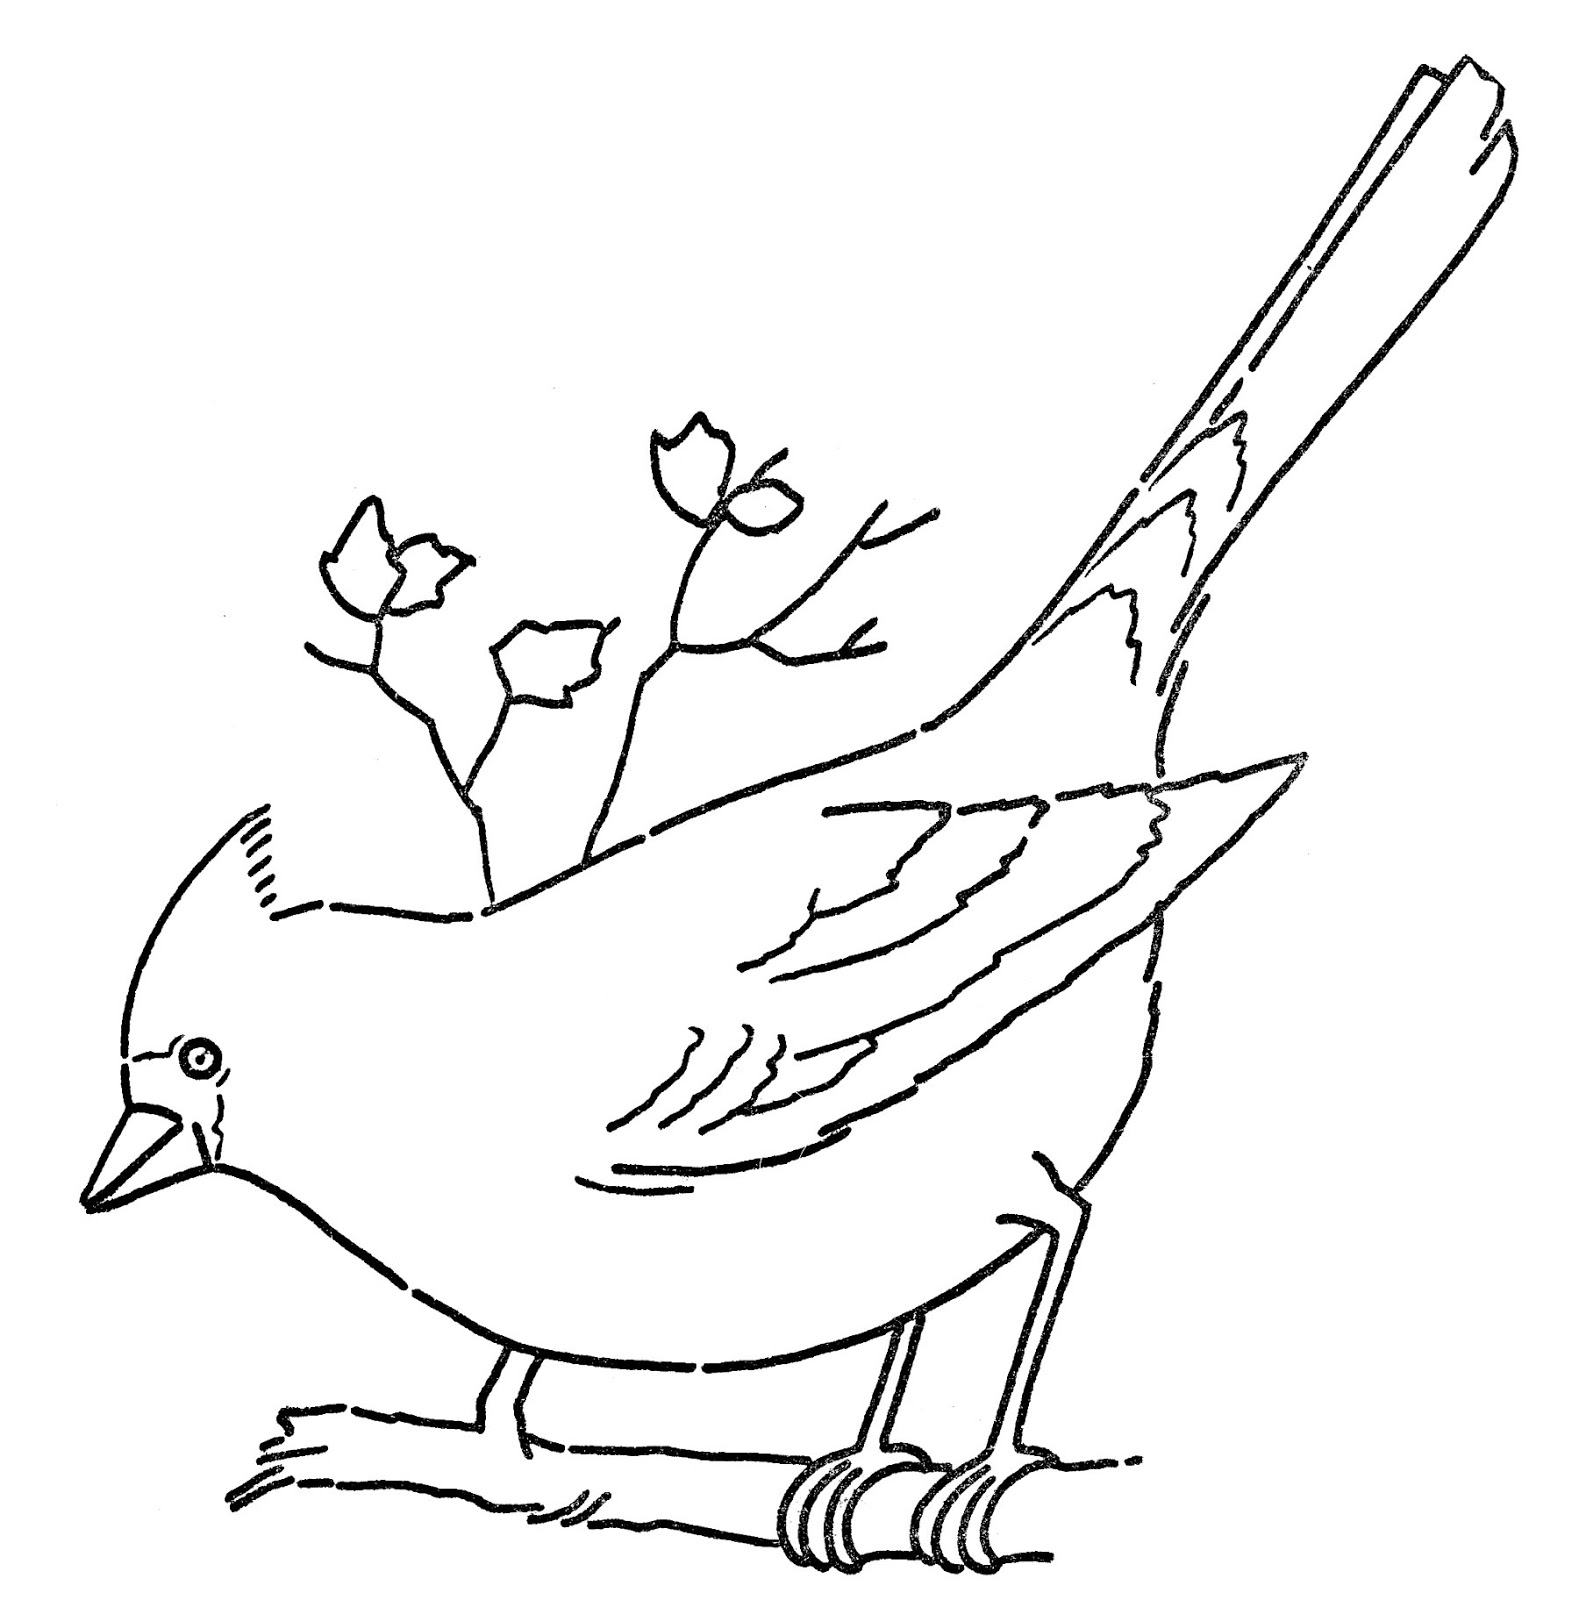 Трафареты птиц для рисования